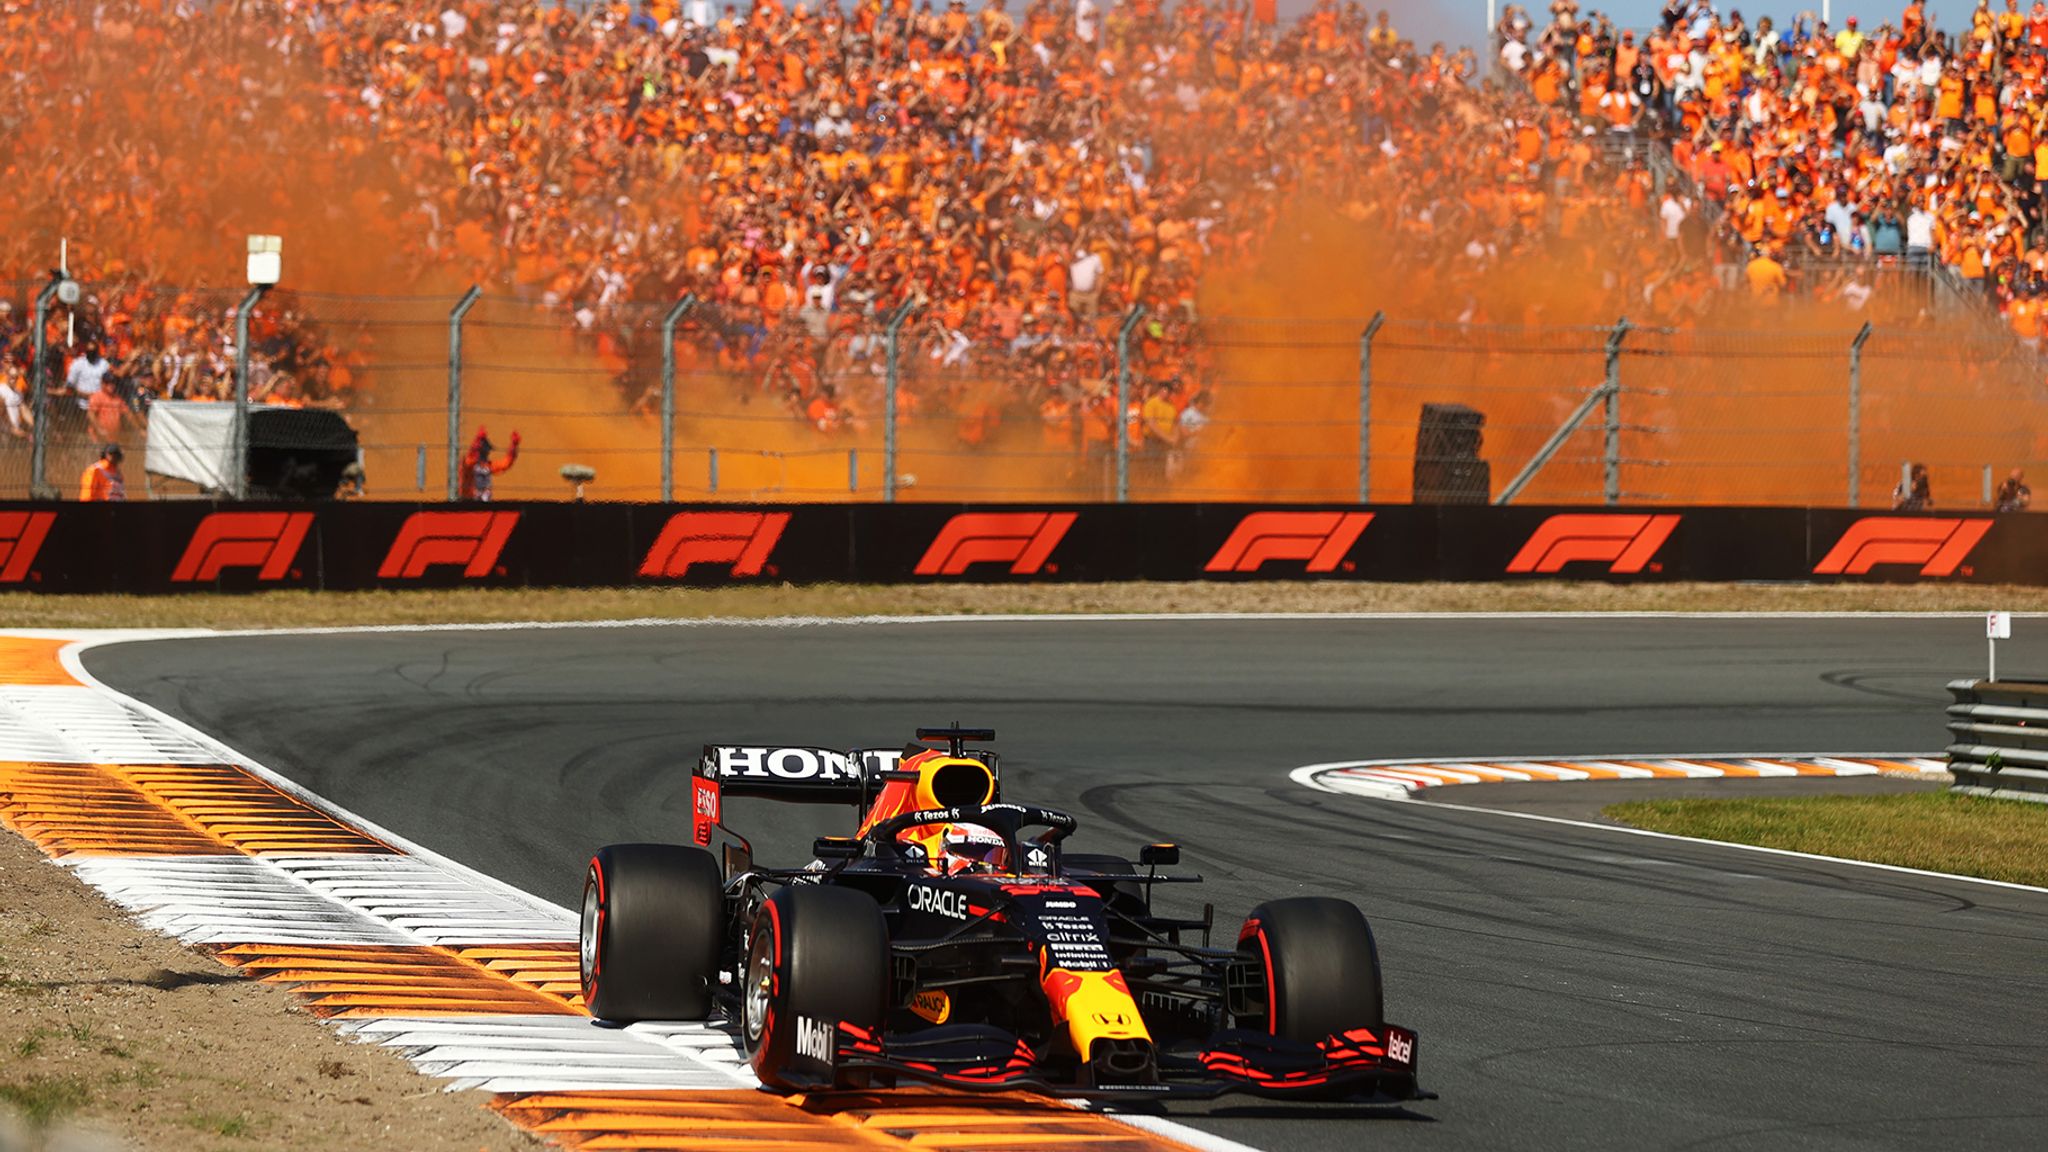 Dutch GP: Max Verstappen beats Lewis Hamilton at home Zandvoort race and retakes F1 title lead